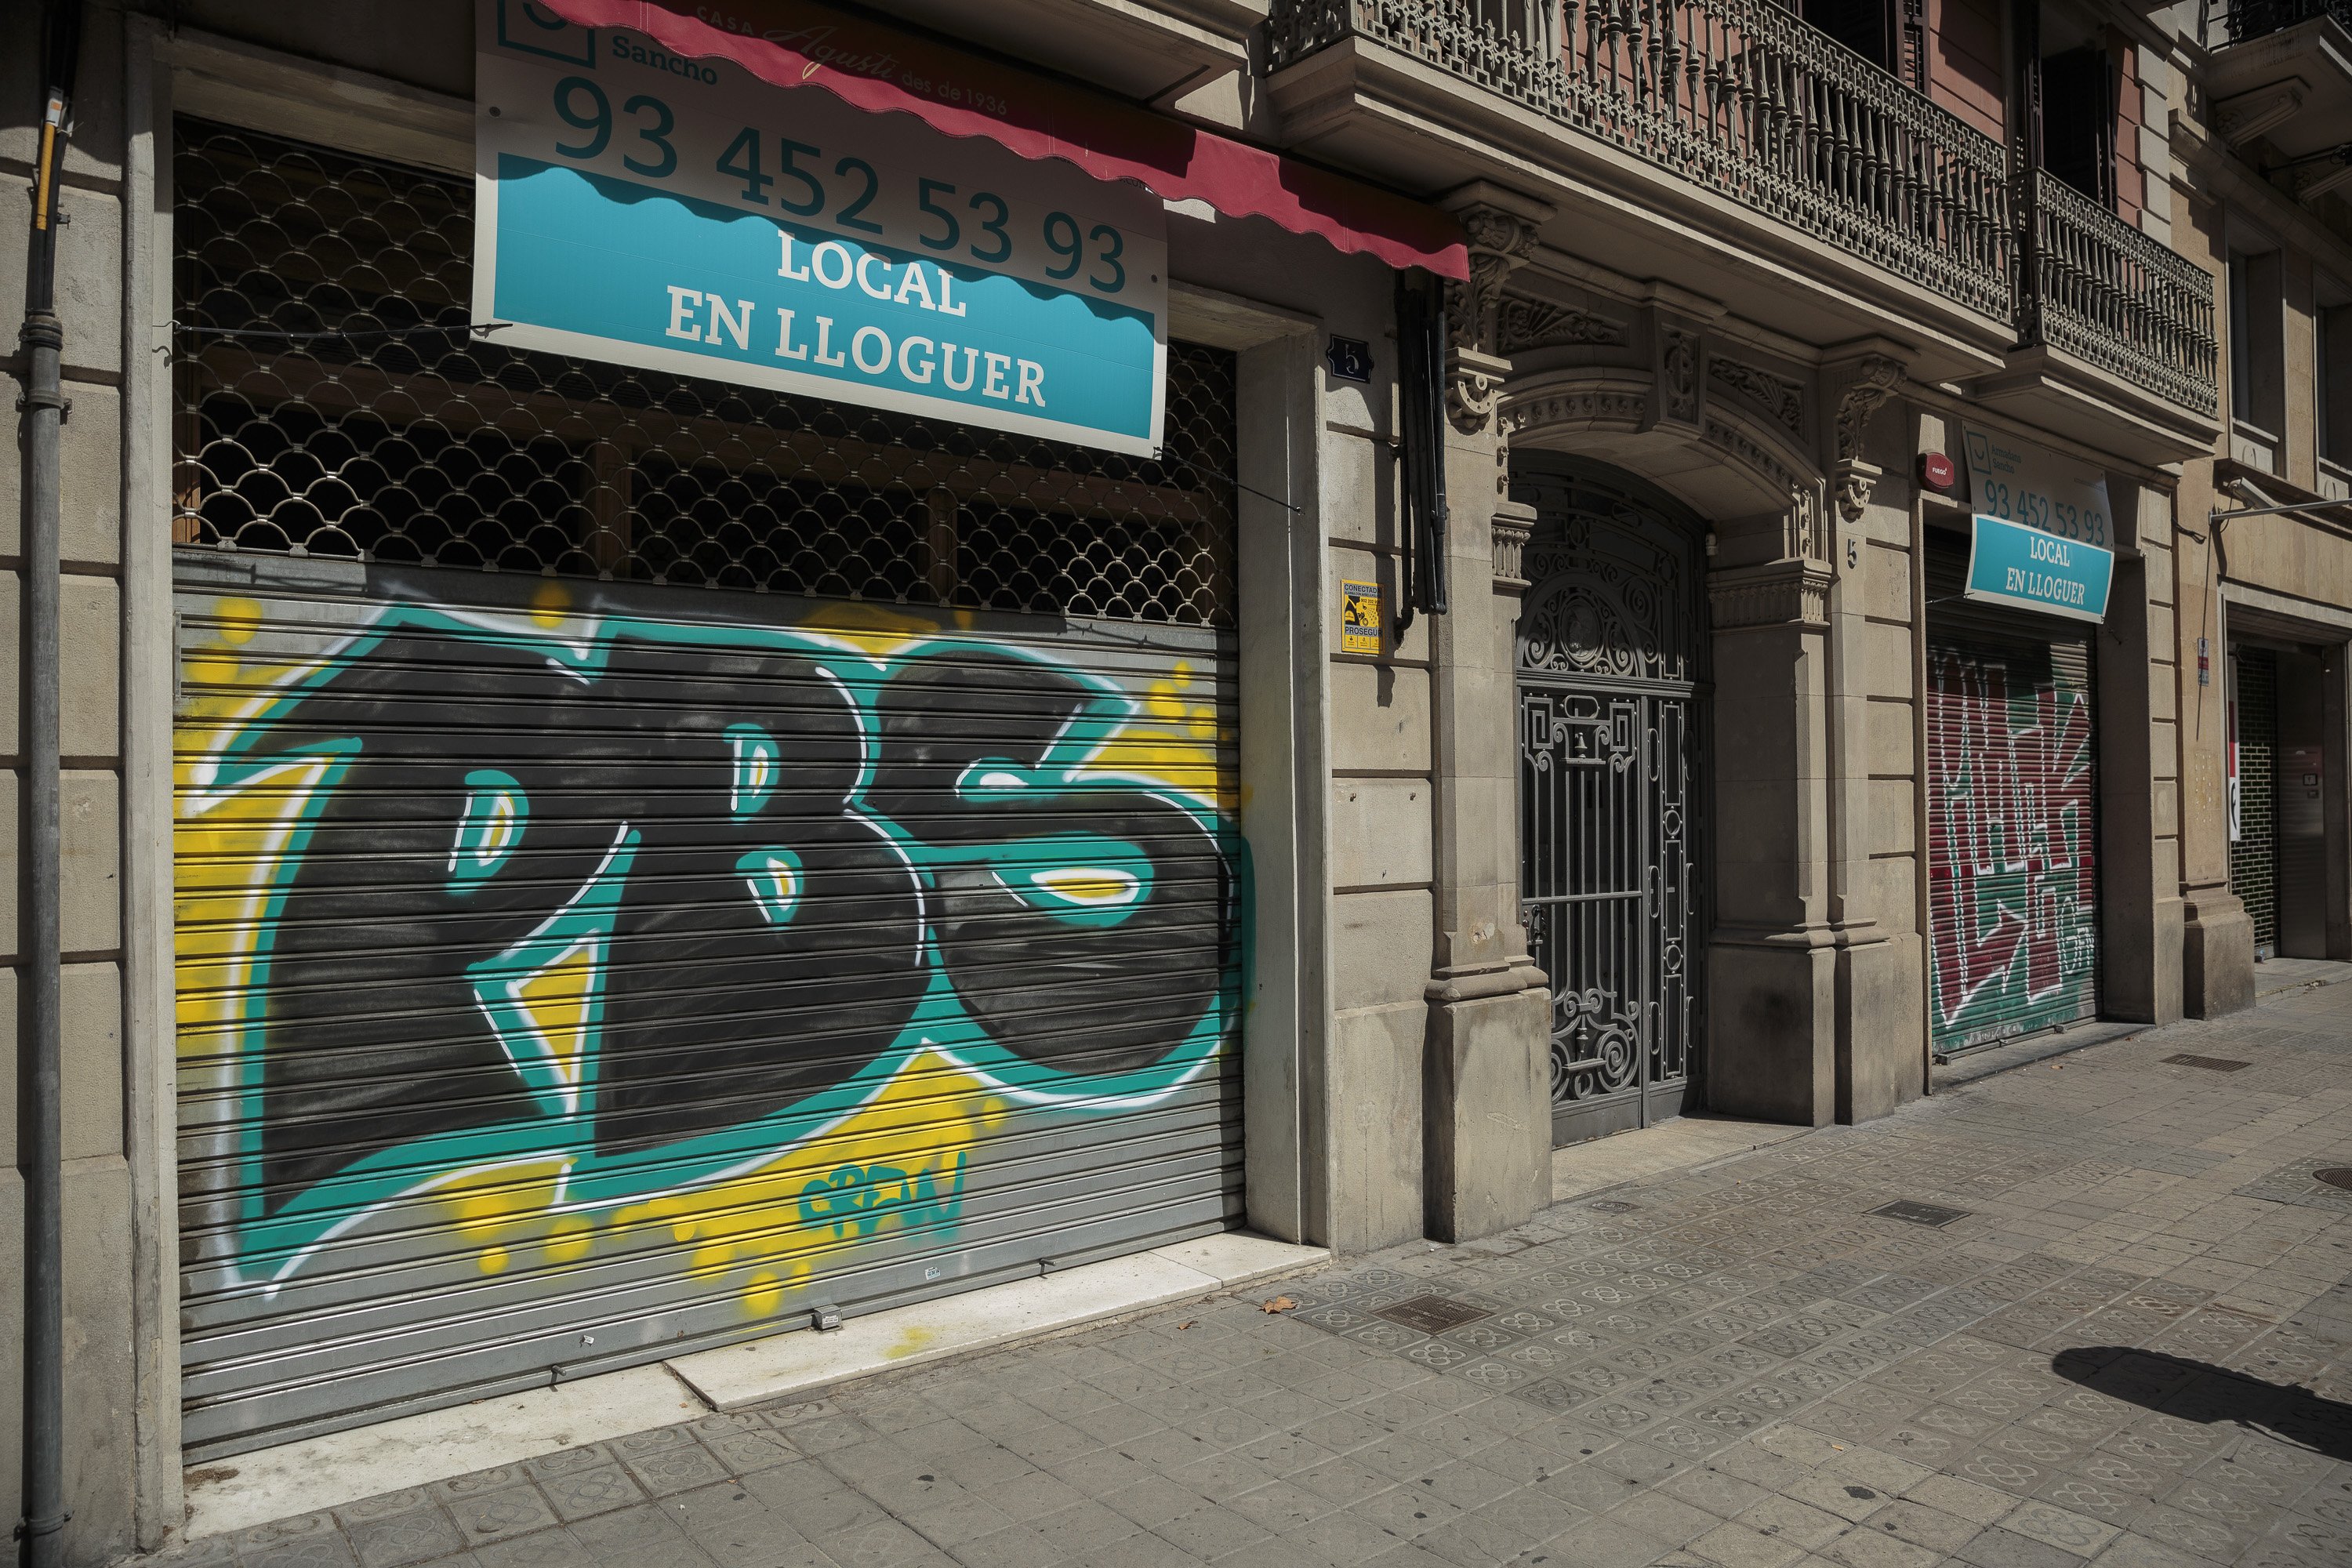 Locals i comerços botiga tancats lloguer crisi coronavirus barcelona - Sergi Alcazar